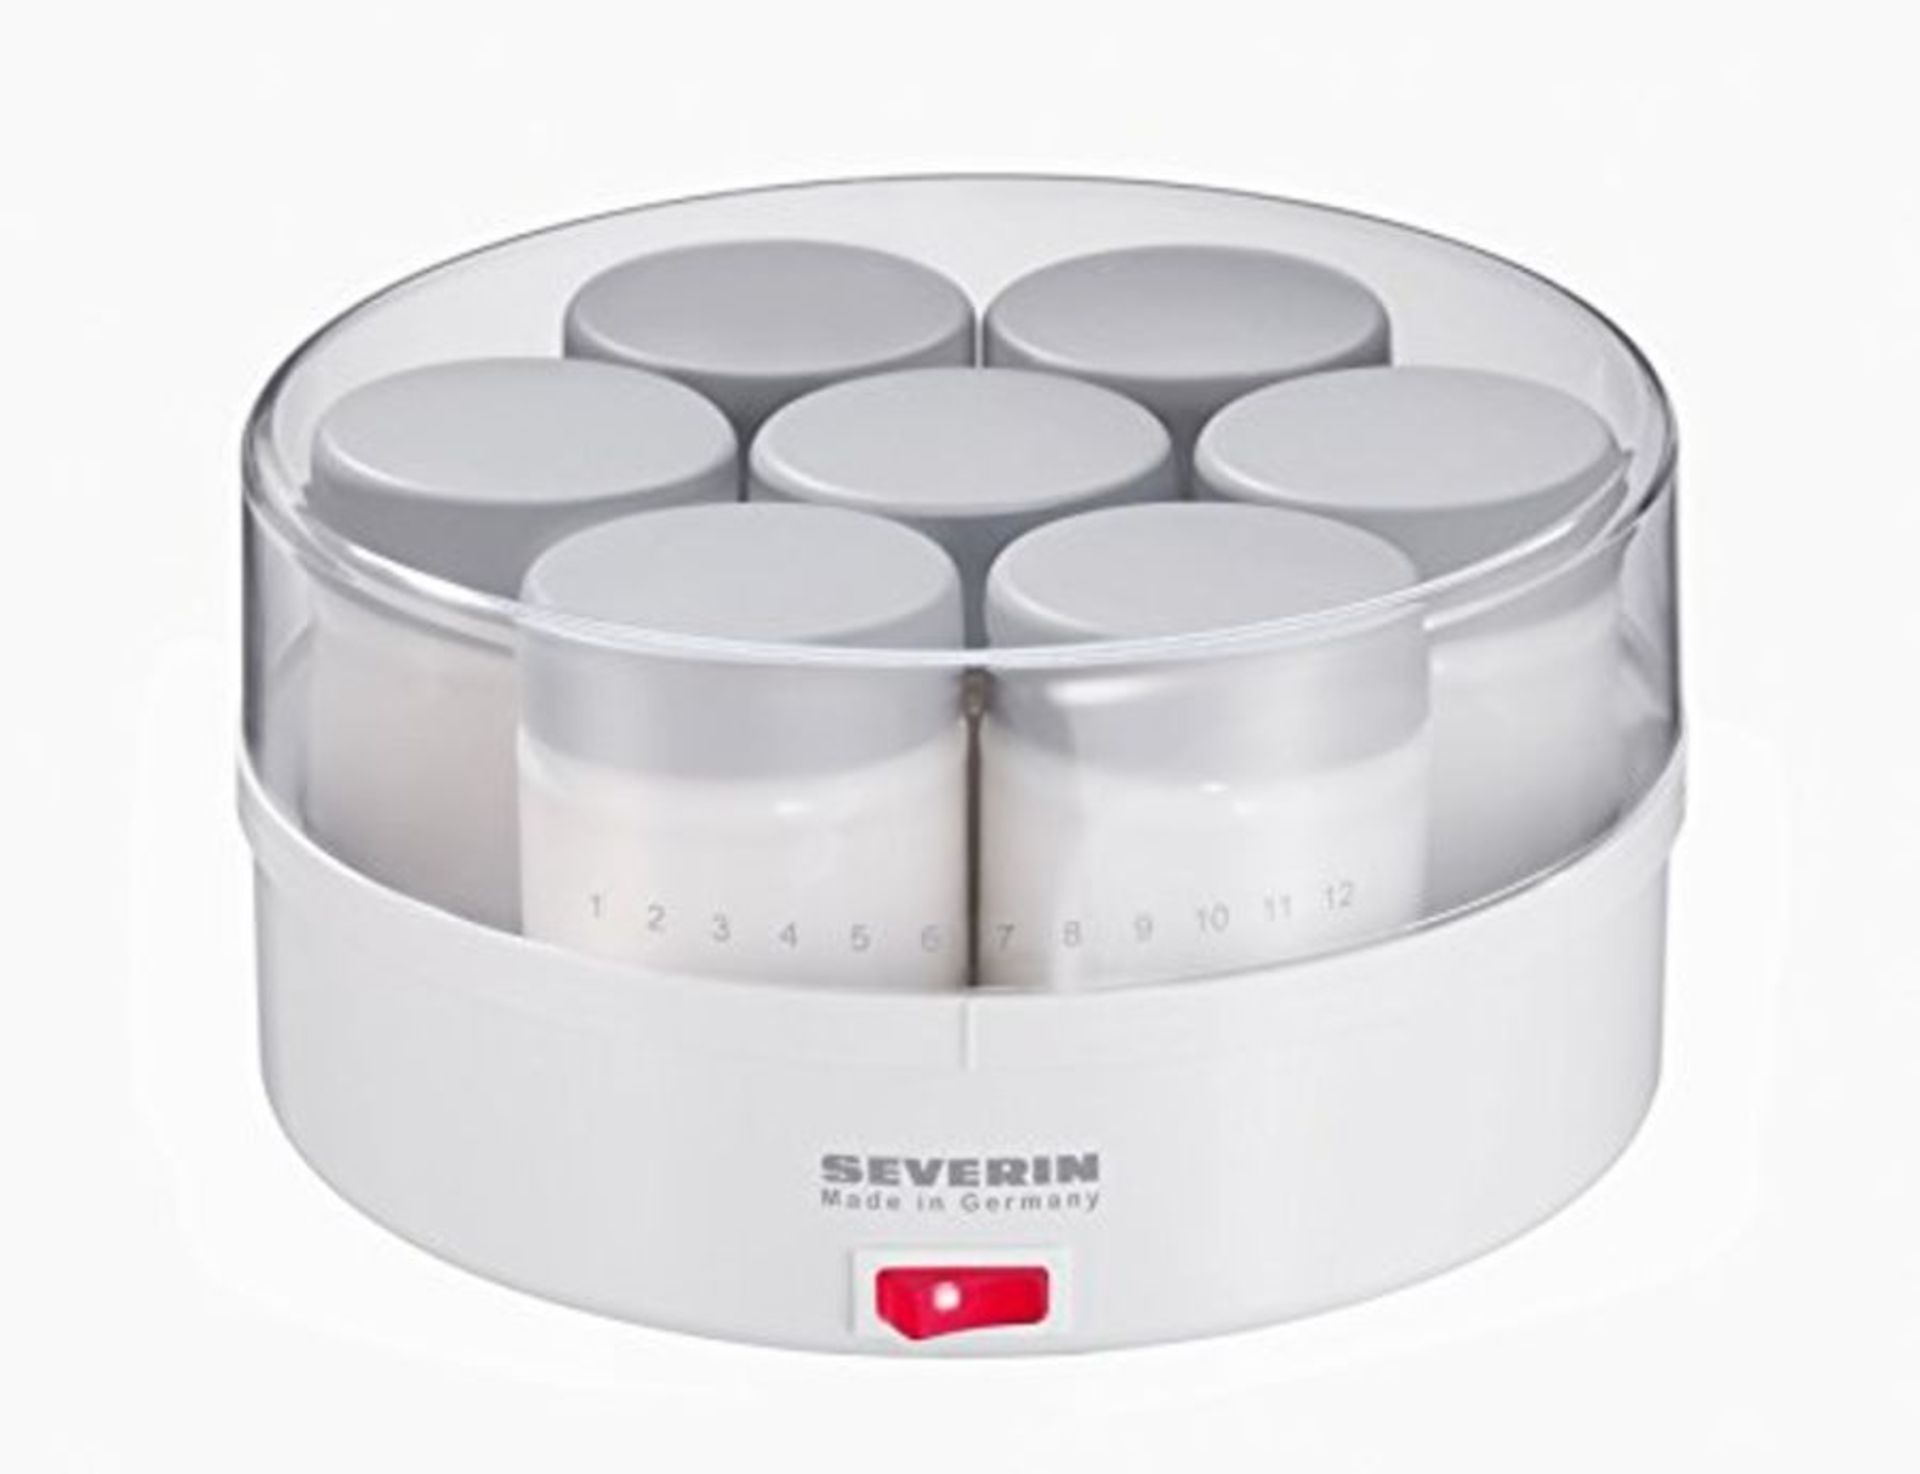 Severin JG 3516 Yoghurt Maker with 7 Glass Jars